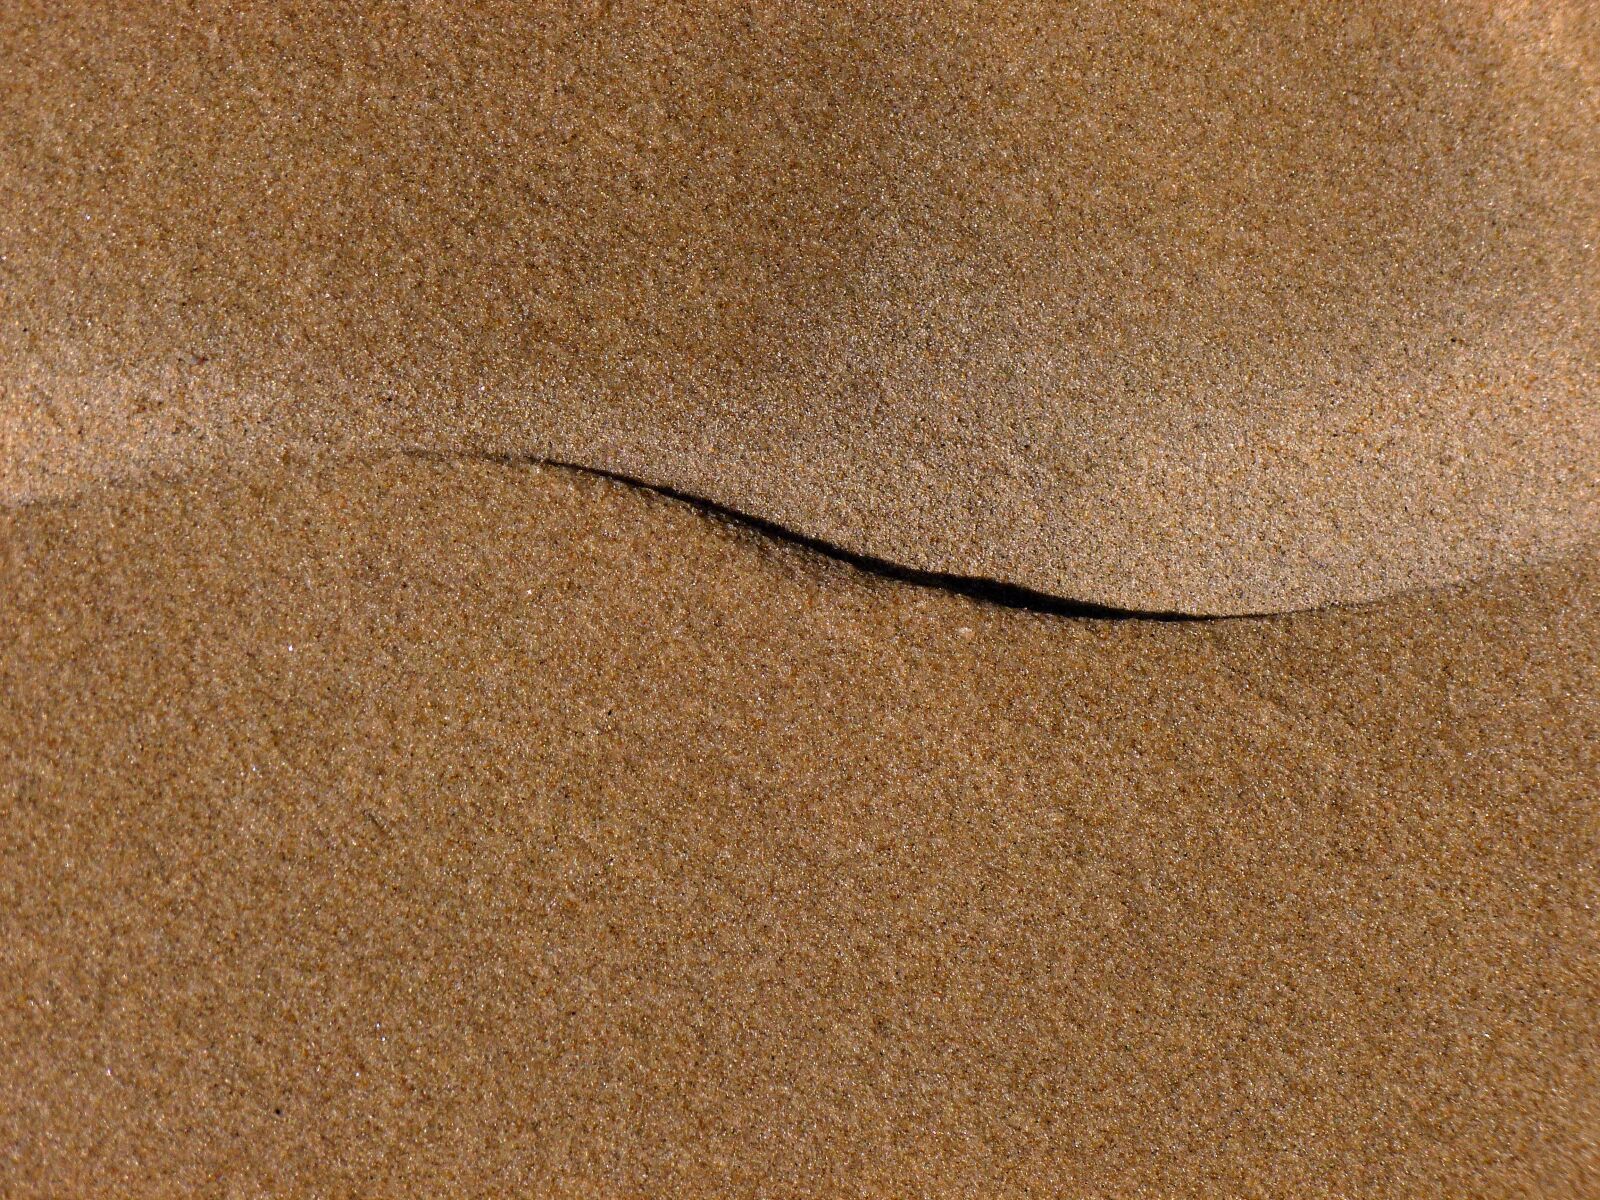 Panasonic DMC-FS37 sample photo. Sand, wave, beach photography